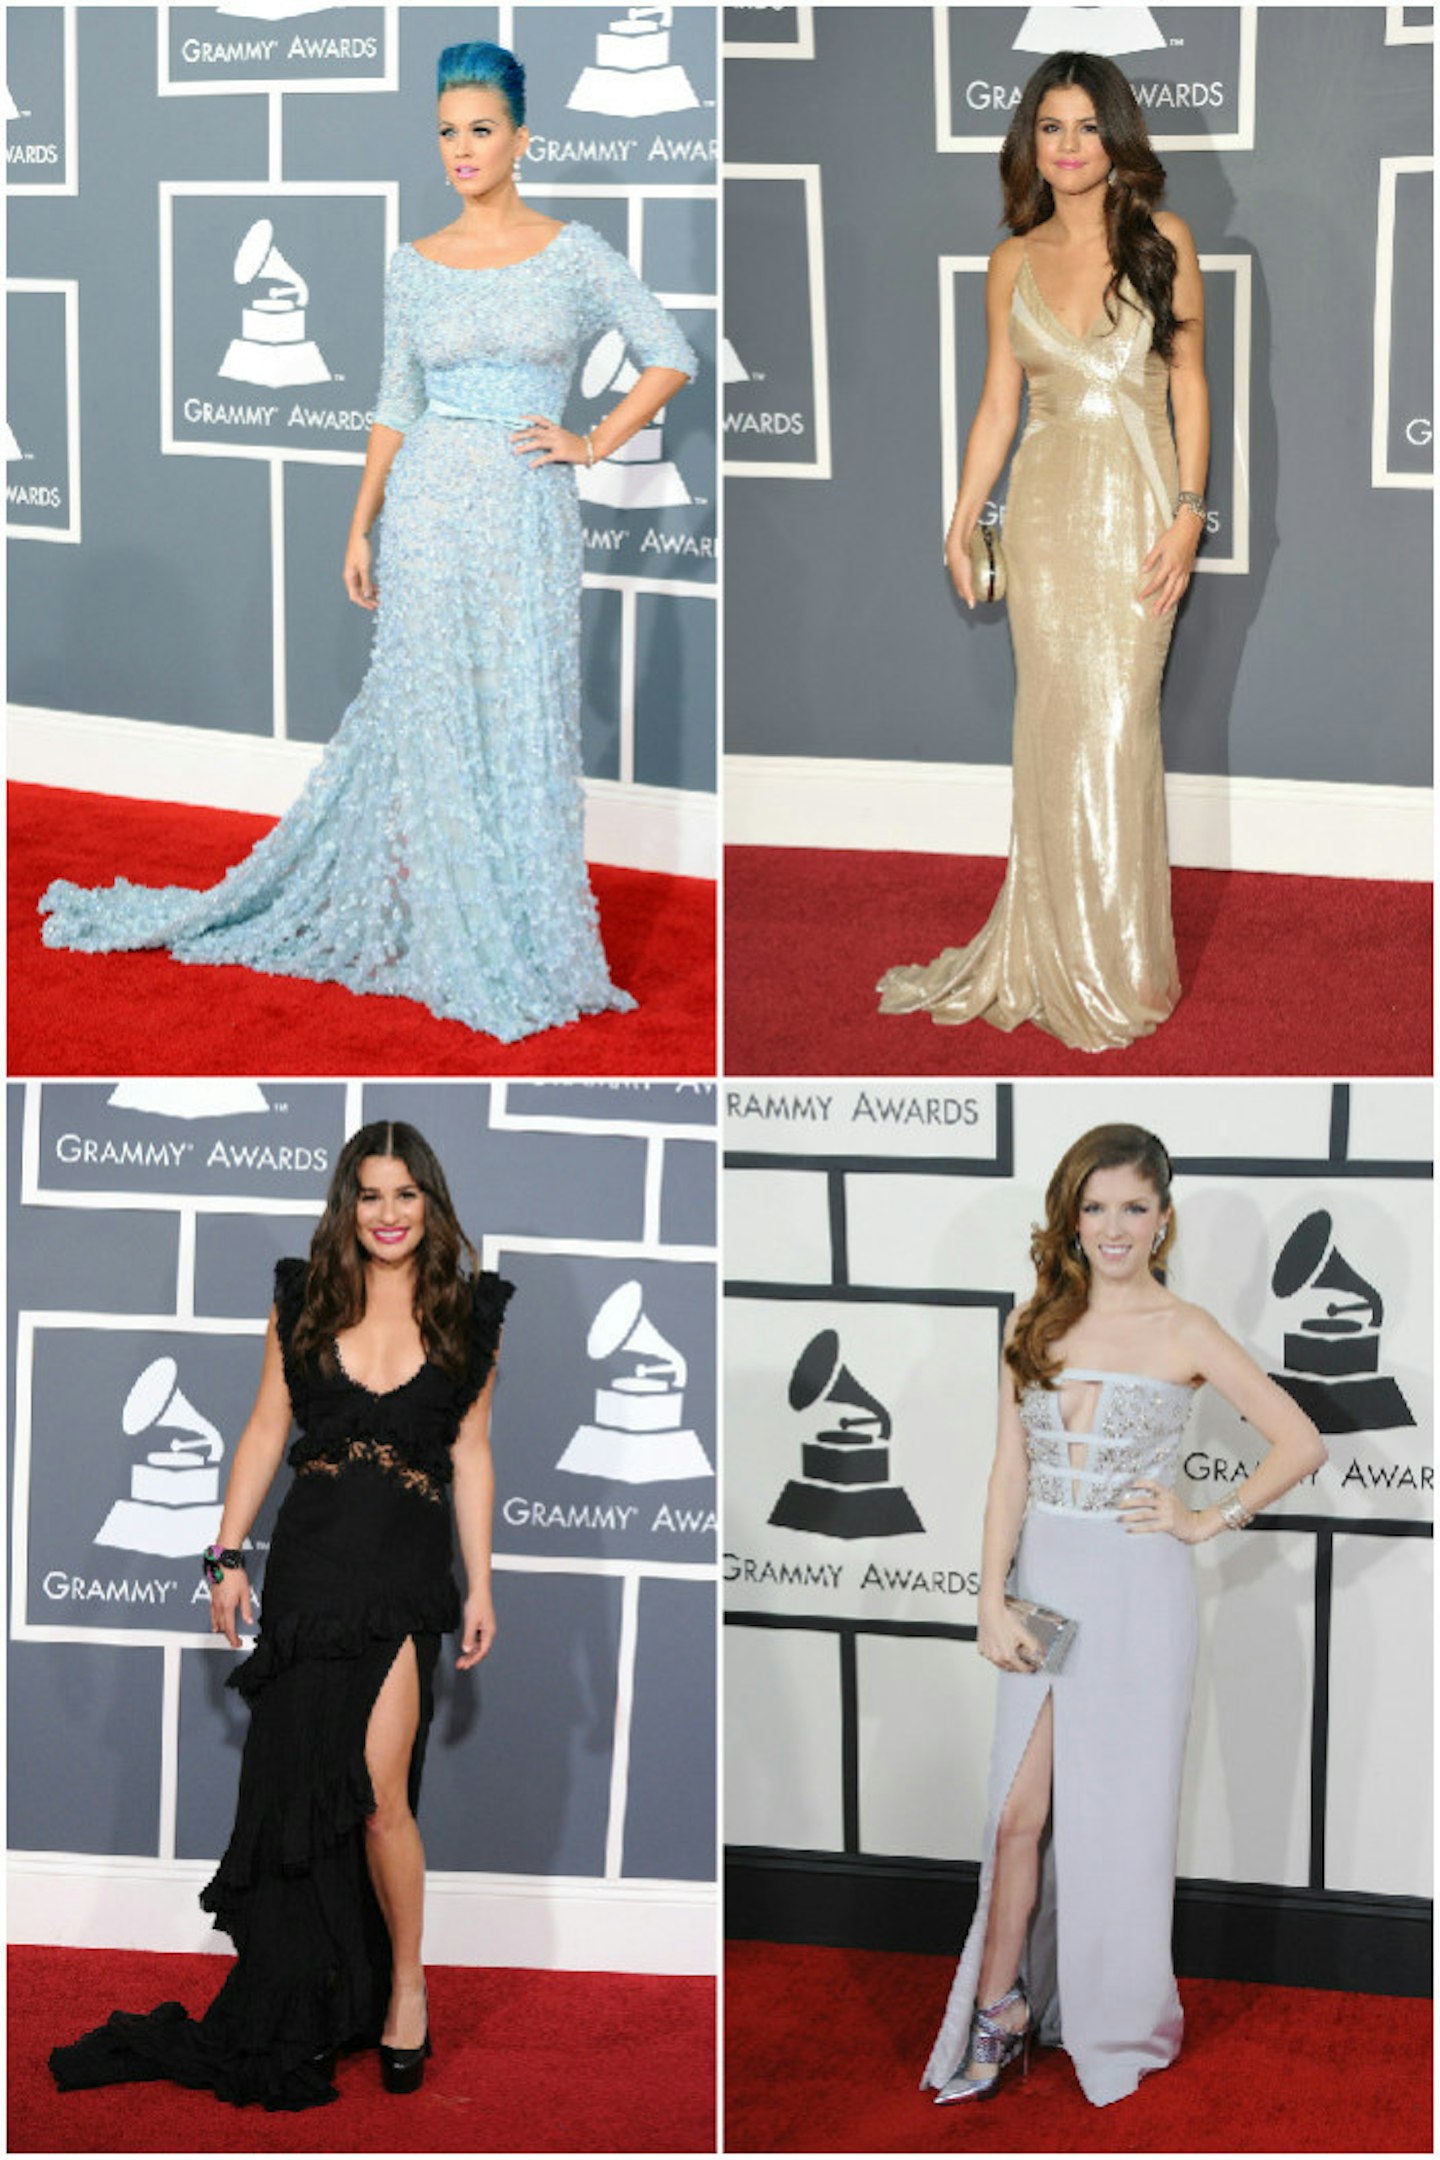 GALLERY >> The Best Grammy Dresses